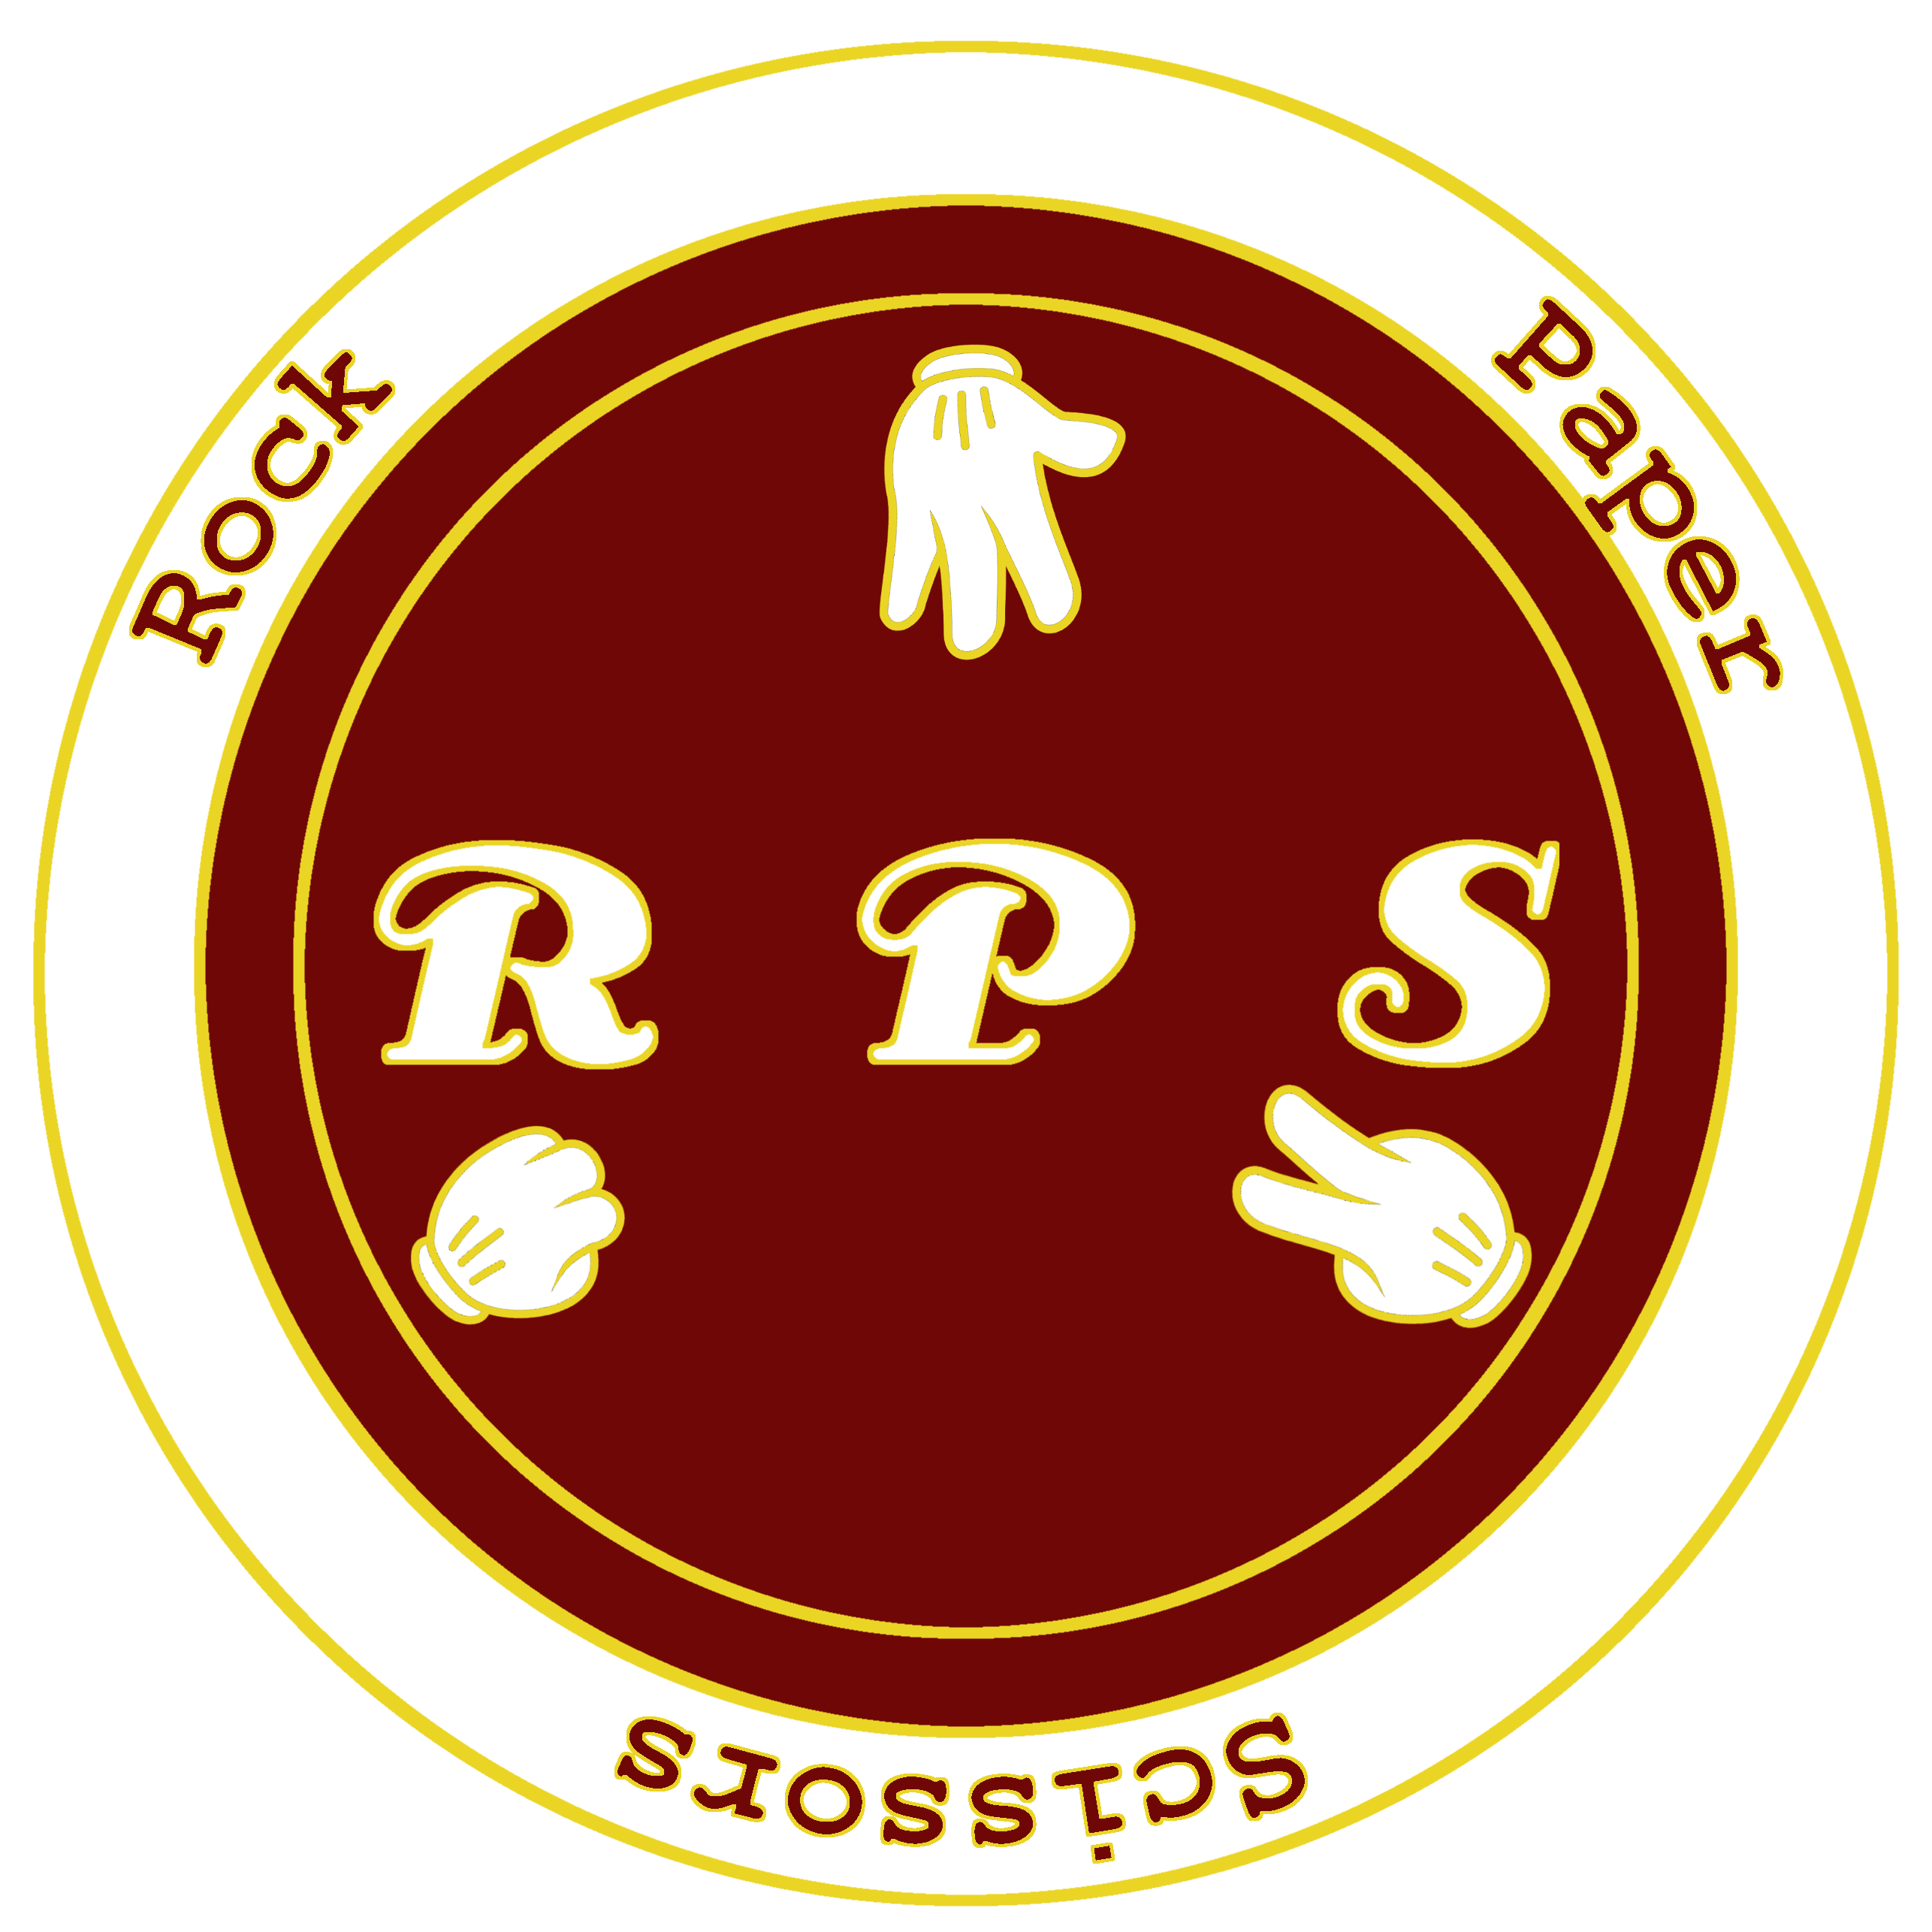 King RPS Logo by Chichanan on DeviantArt